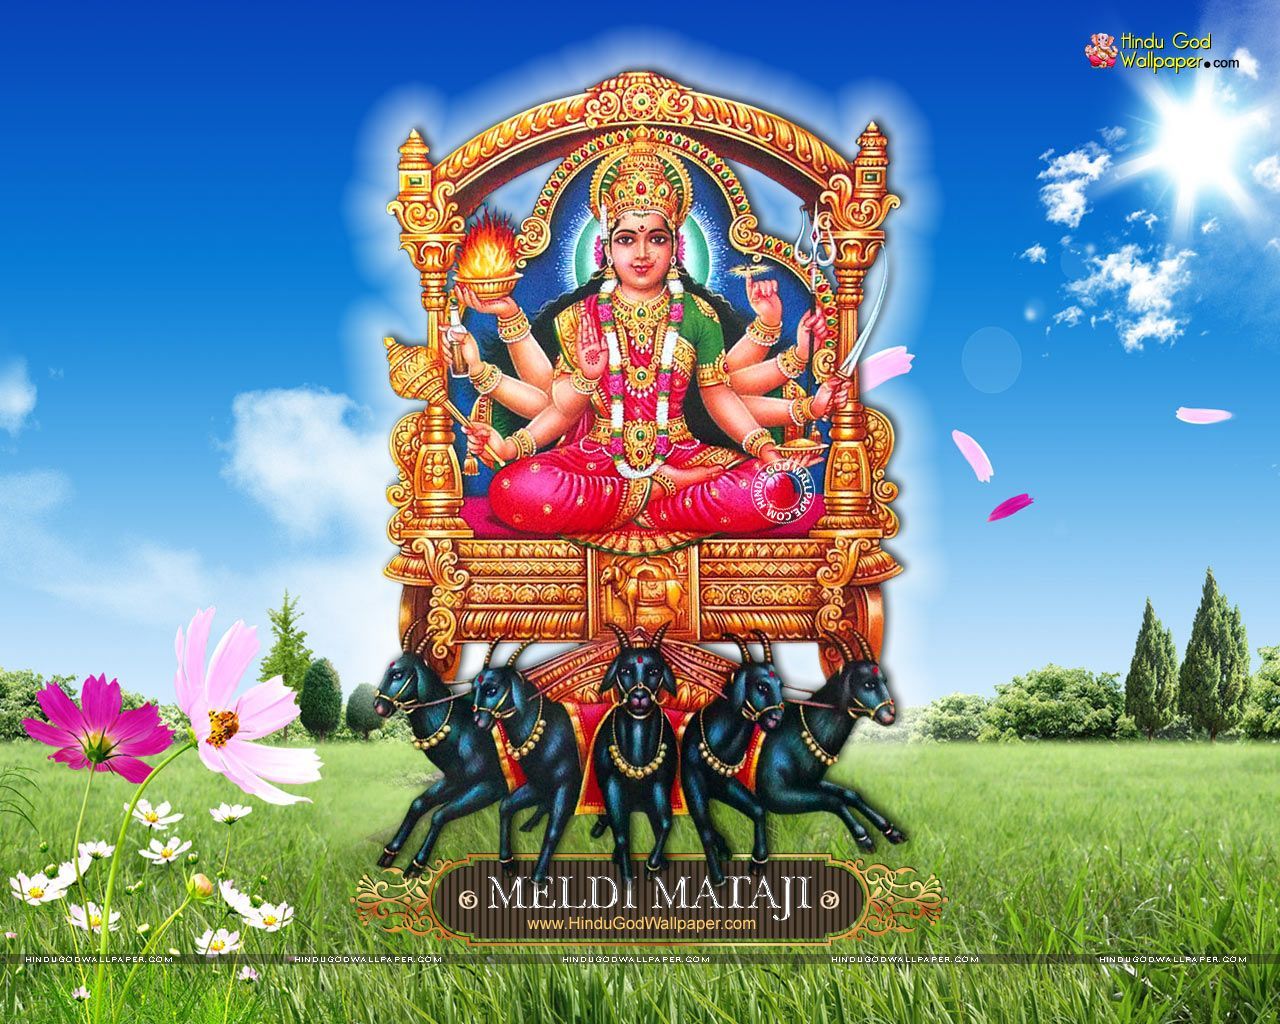 Meldi Maa Live Wallpaper & Photo Free Download. Live wallpaper